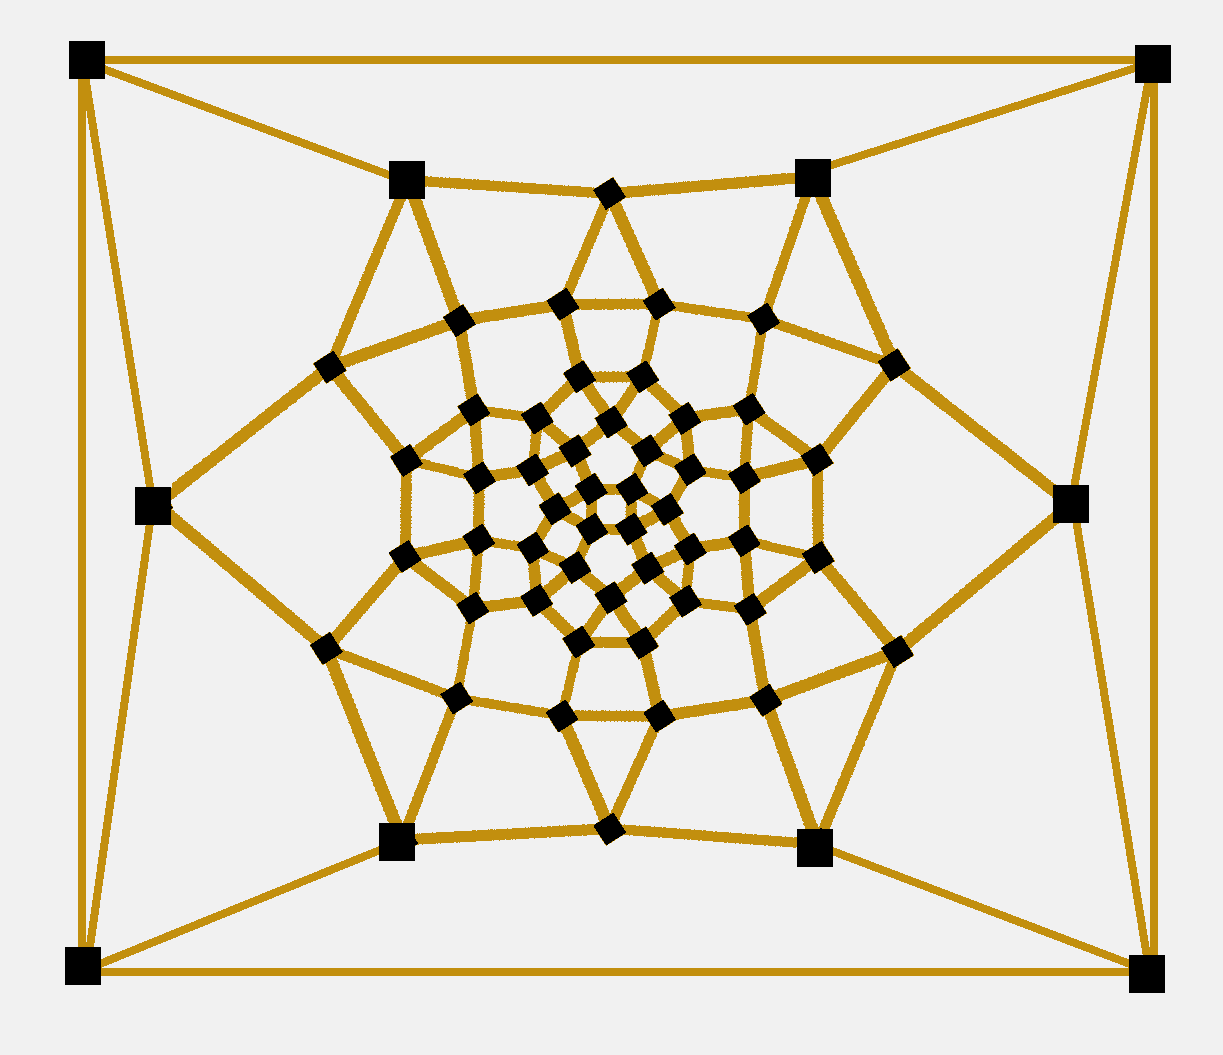 The conference logo, a 60-vertex graph